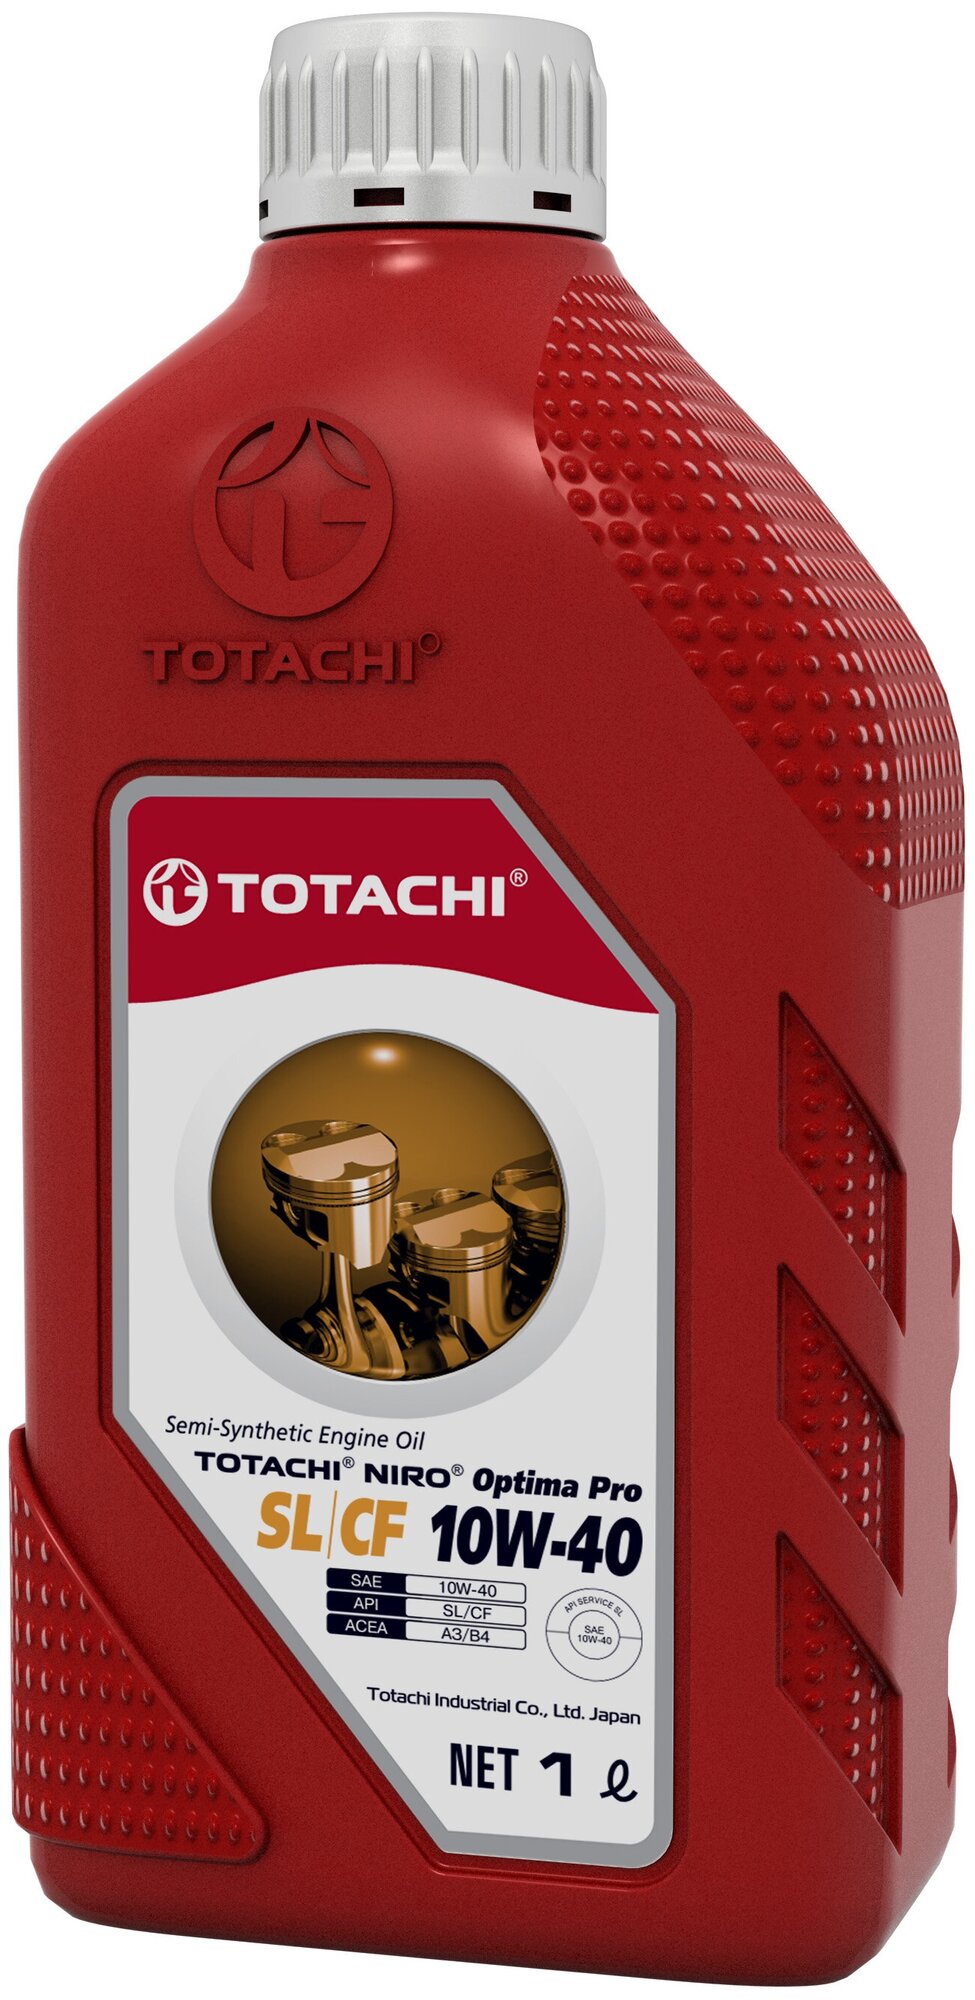 Totachi моторное масло totachi niro optima pro 10w-40, 1л 1c401